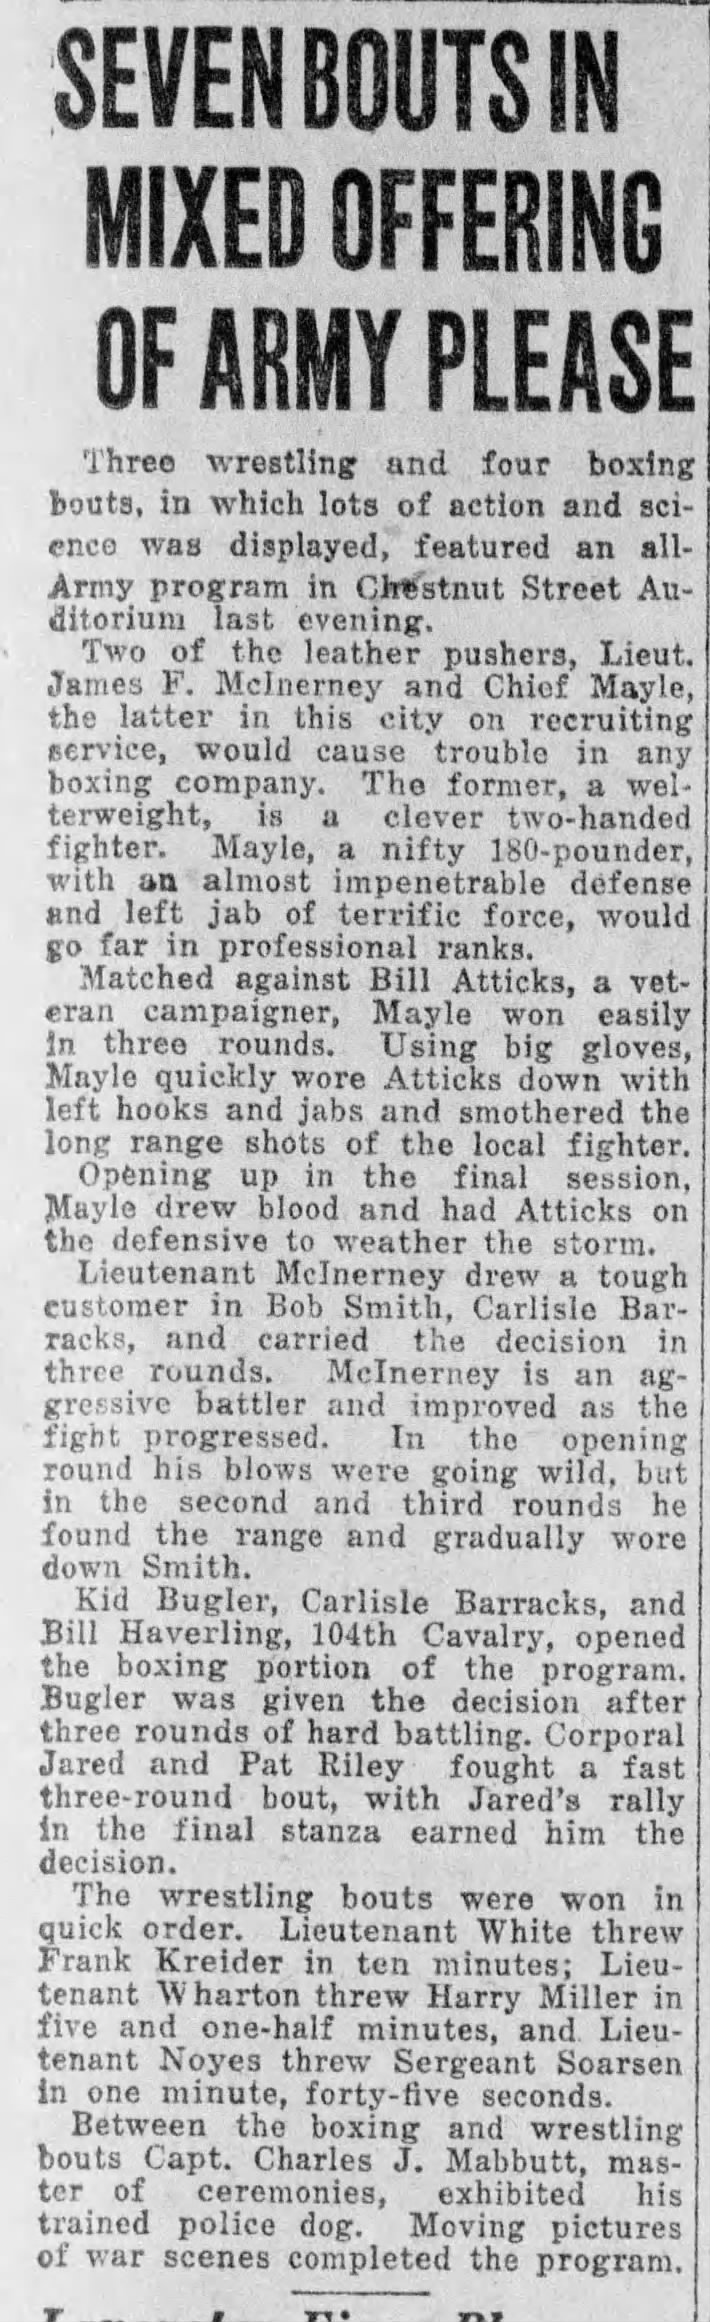 The Evening News (Harrisburg, Pennsylvania) 19 March 1924 Mayle